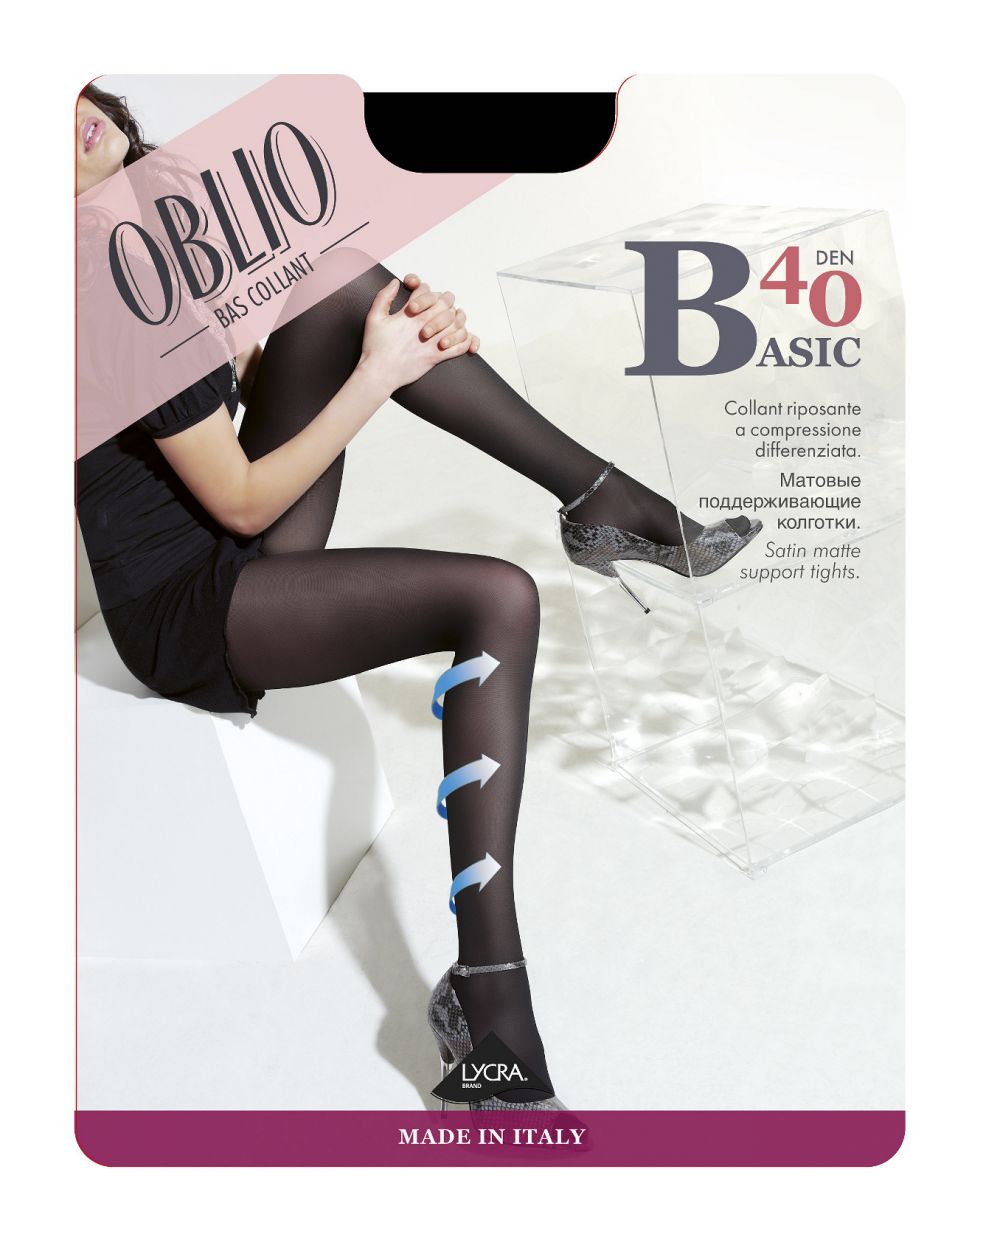 Oblio Basic tights 40 denier 2-4